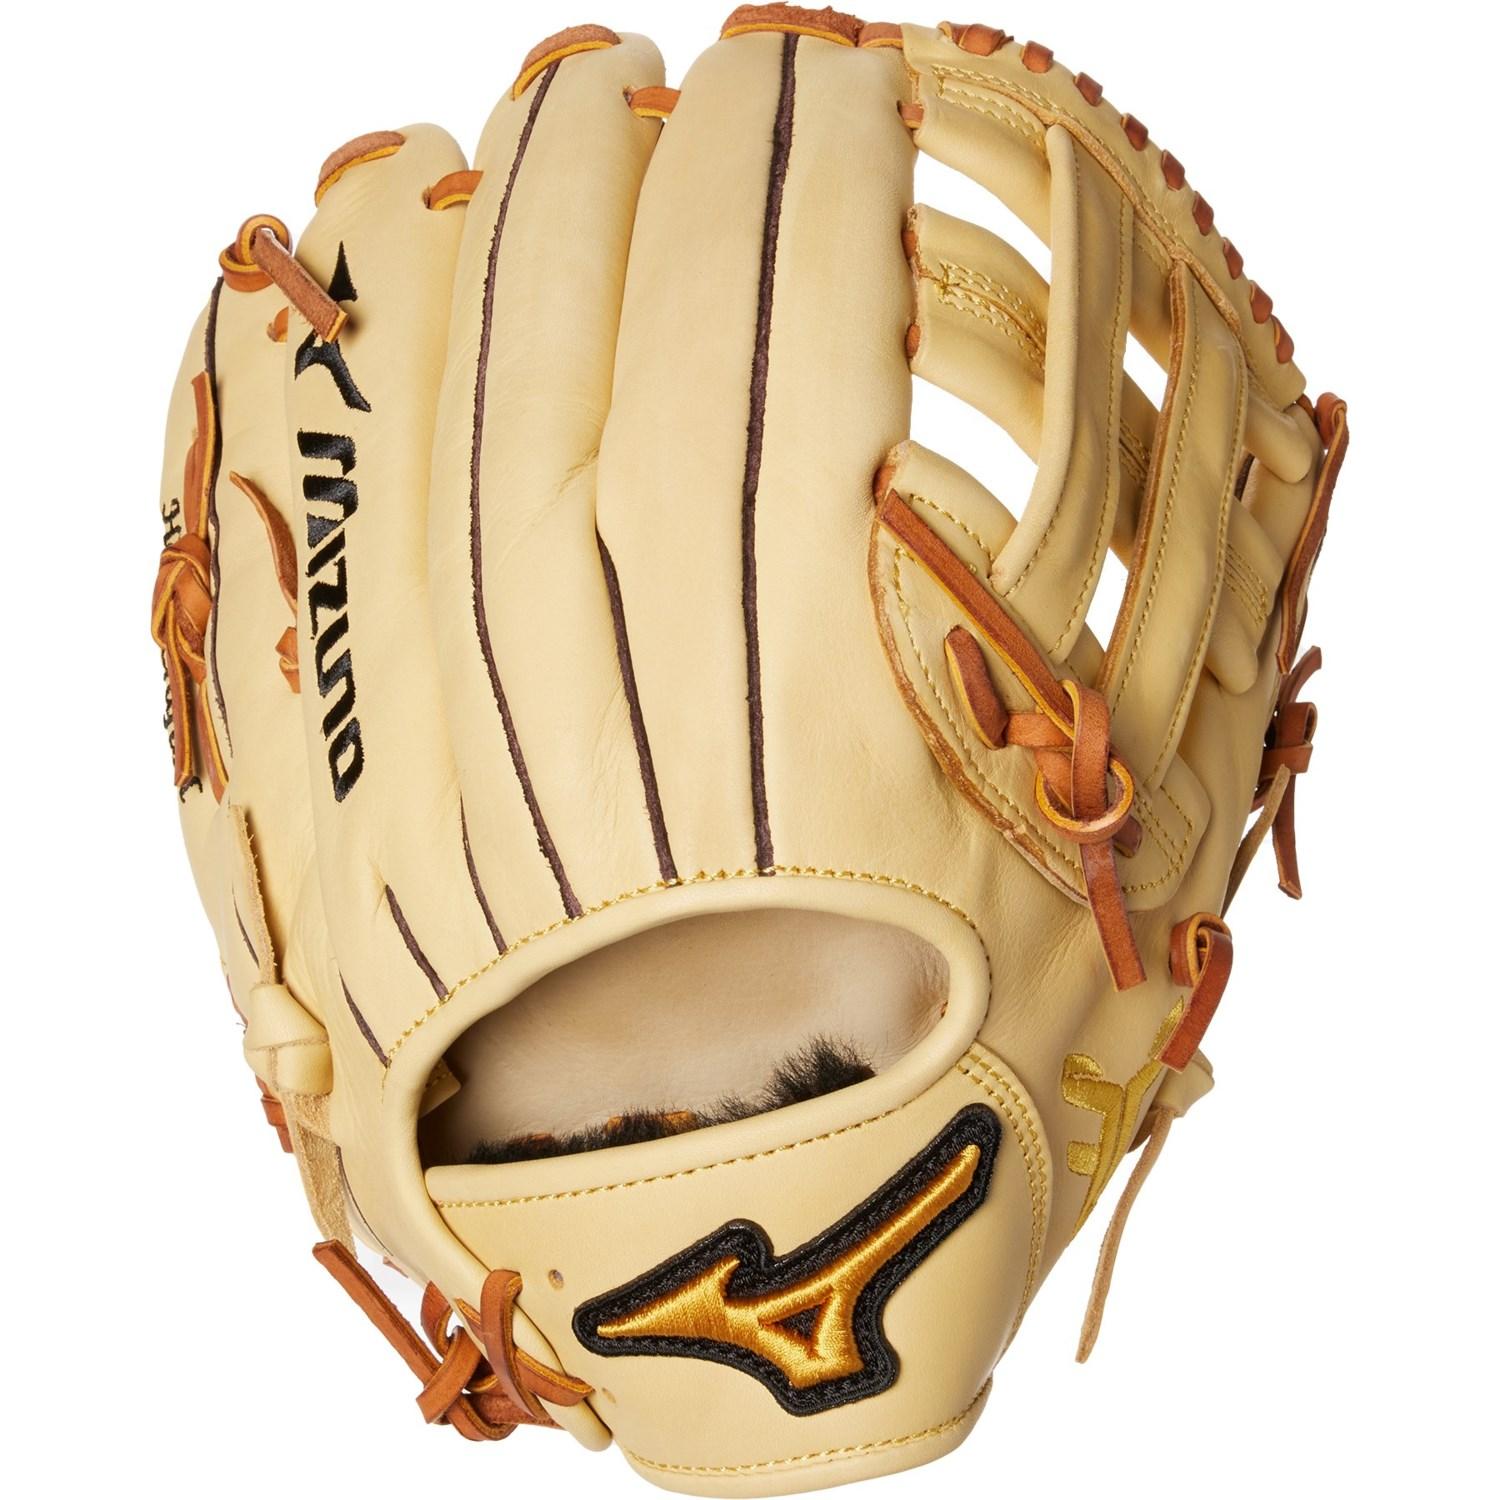 Mizuno Pro Select Series Fernando Tatis Jr Baseball Glove for $99.99 Shipped